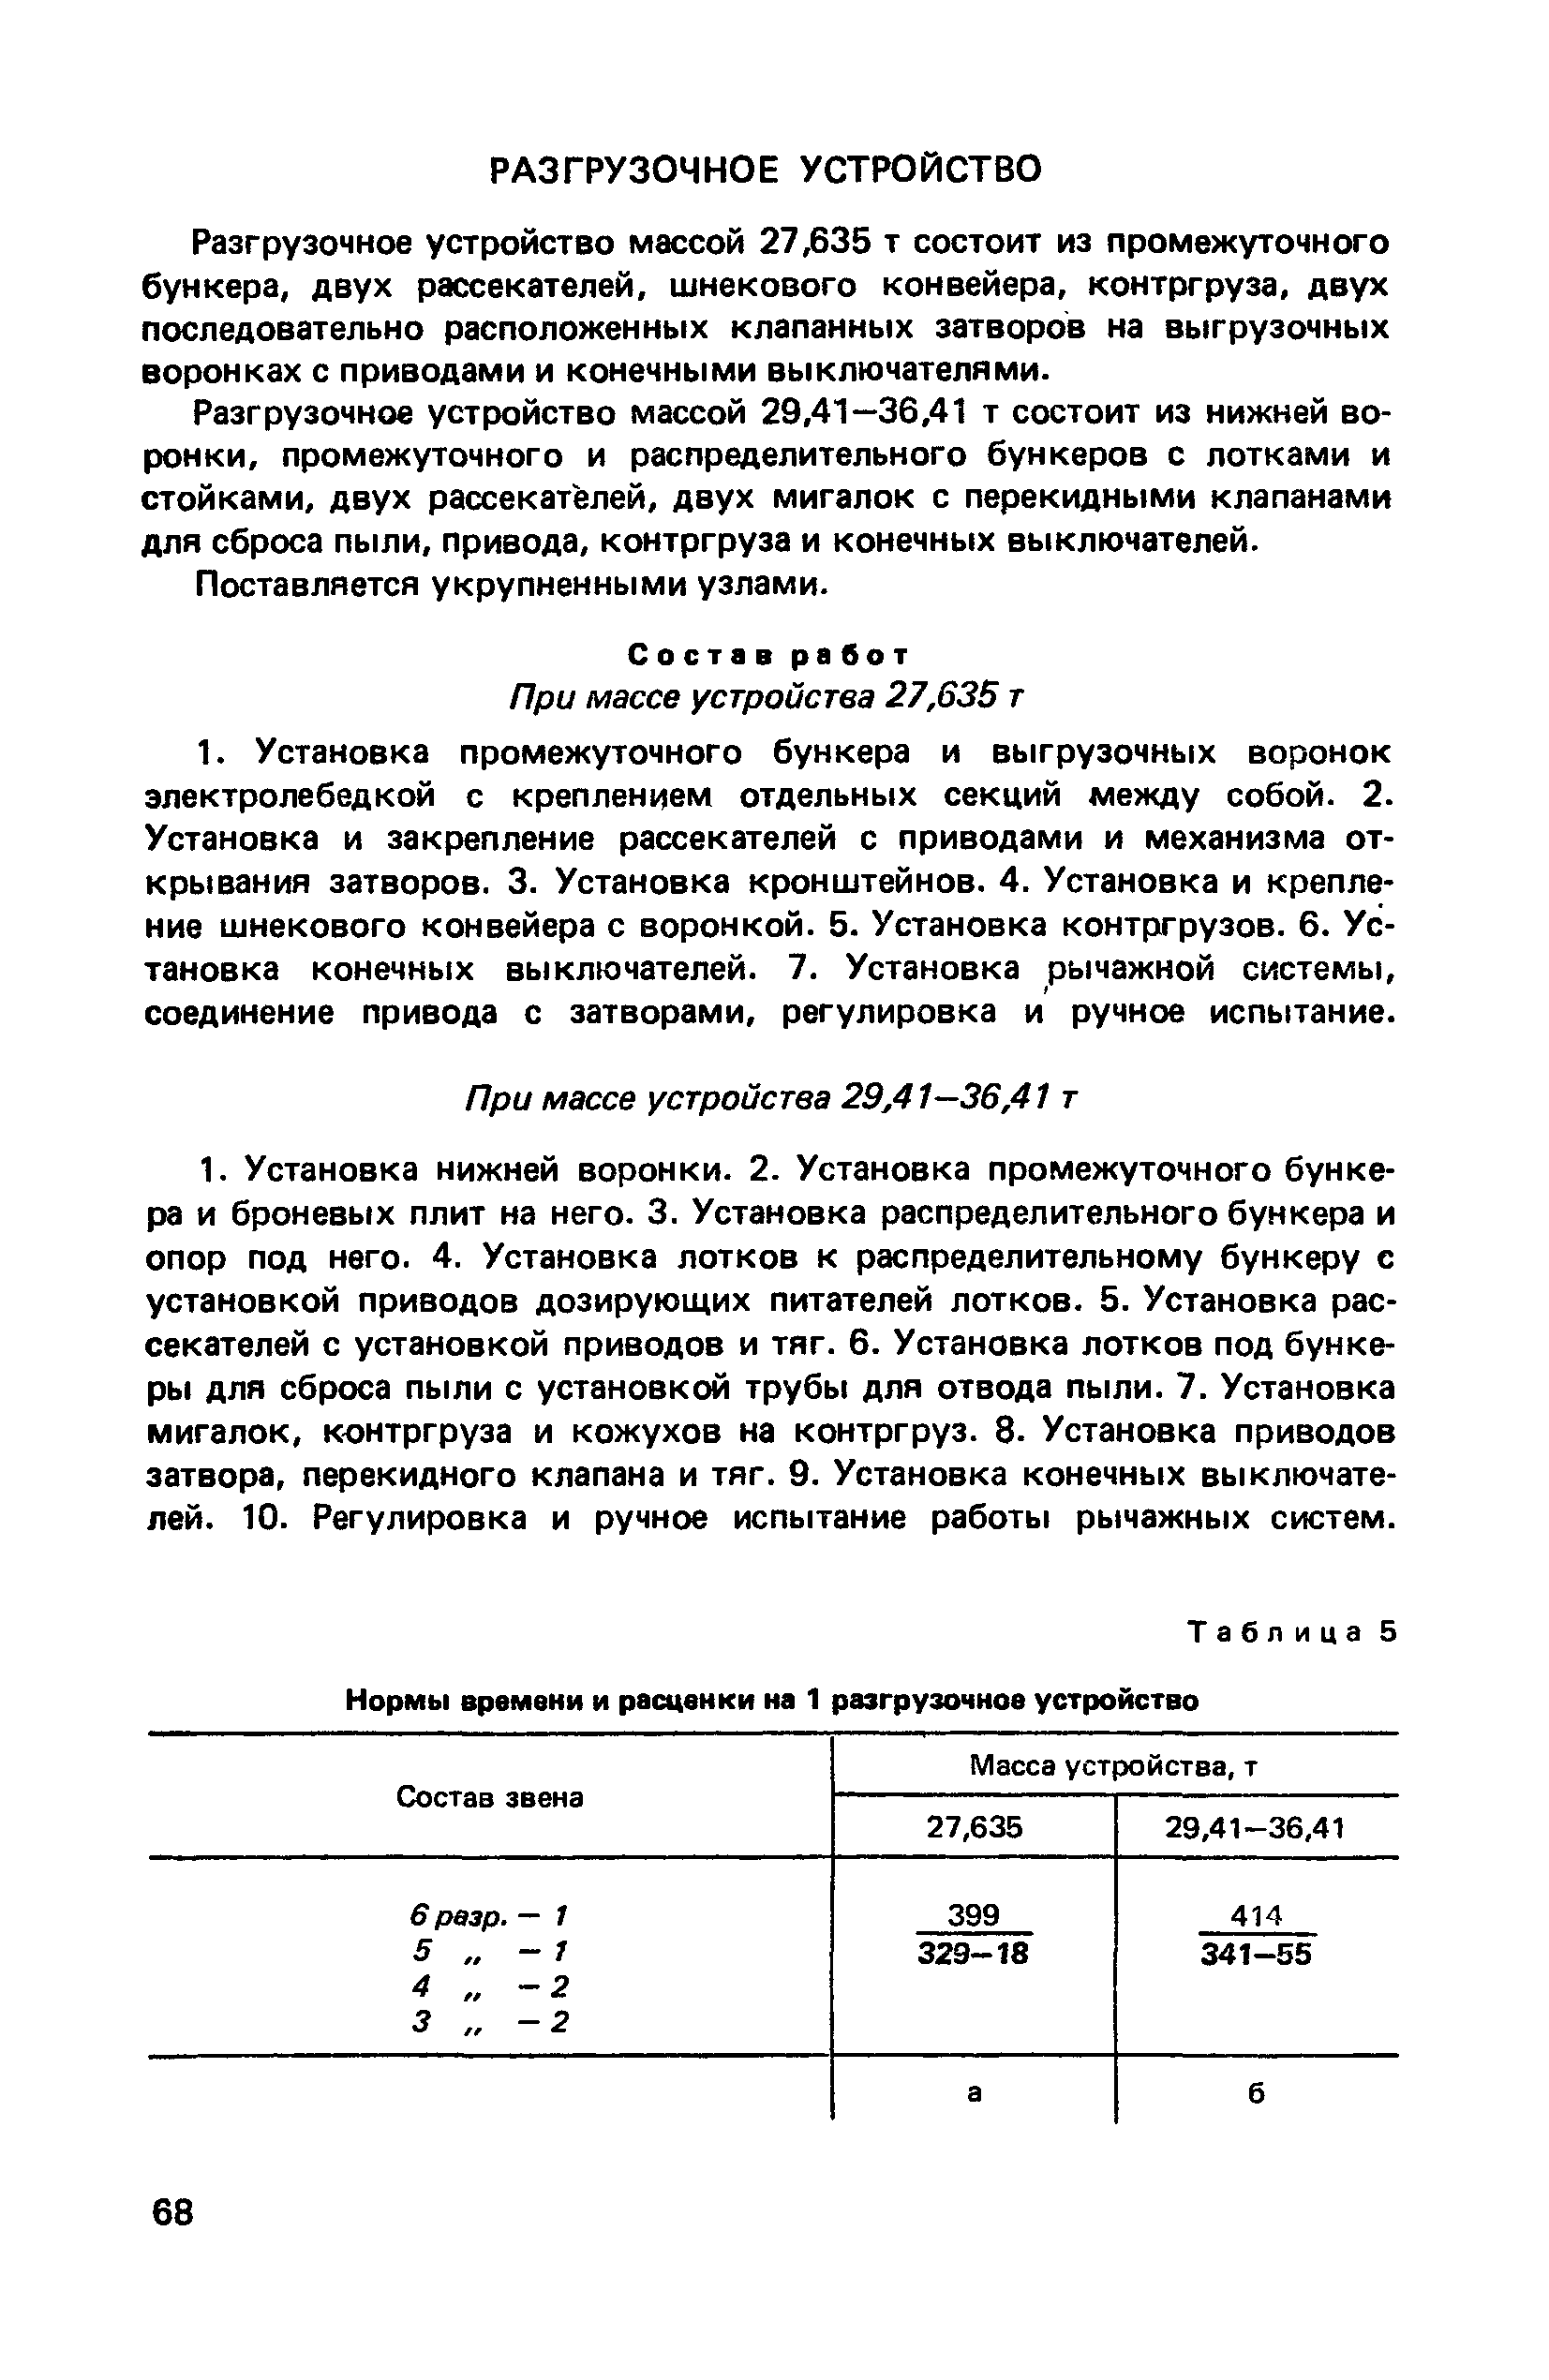 ВНиР В6-6